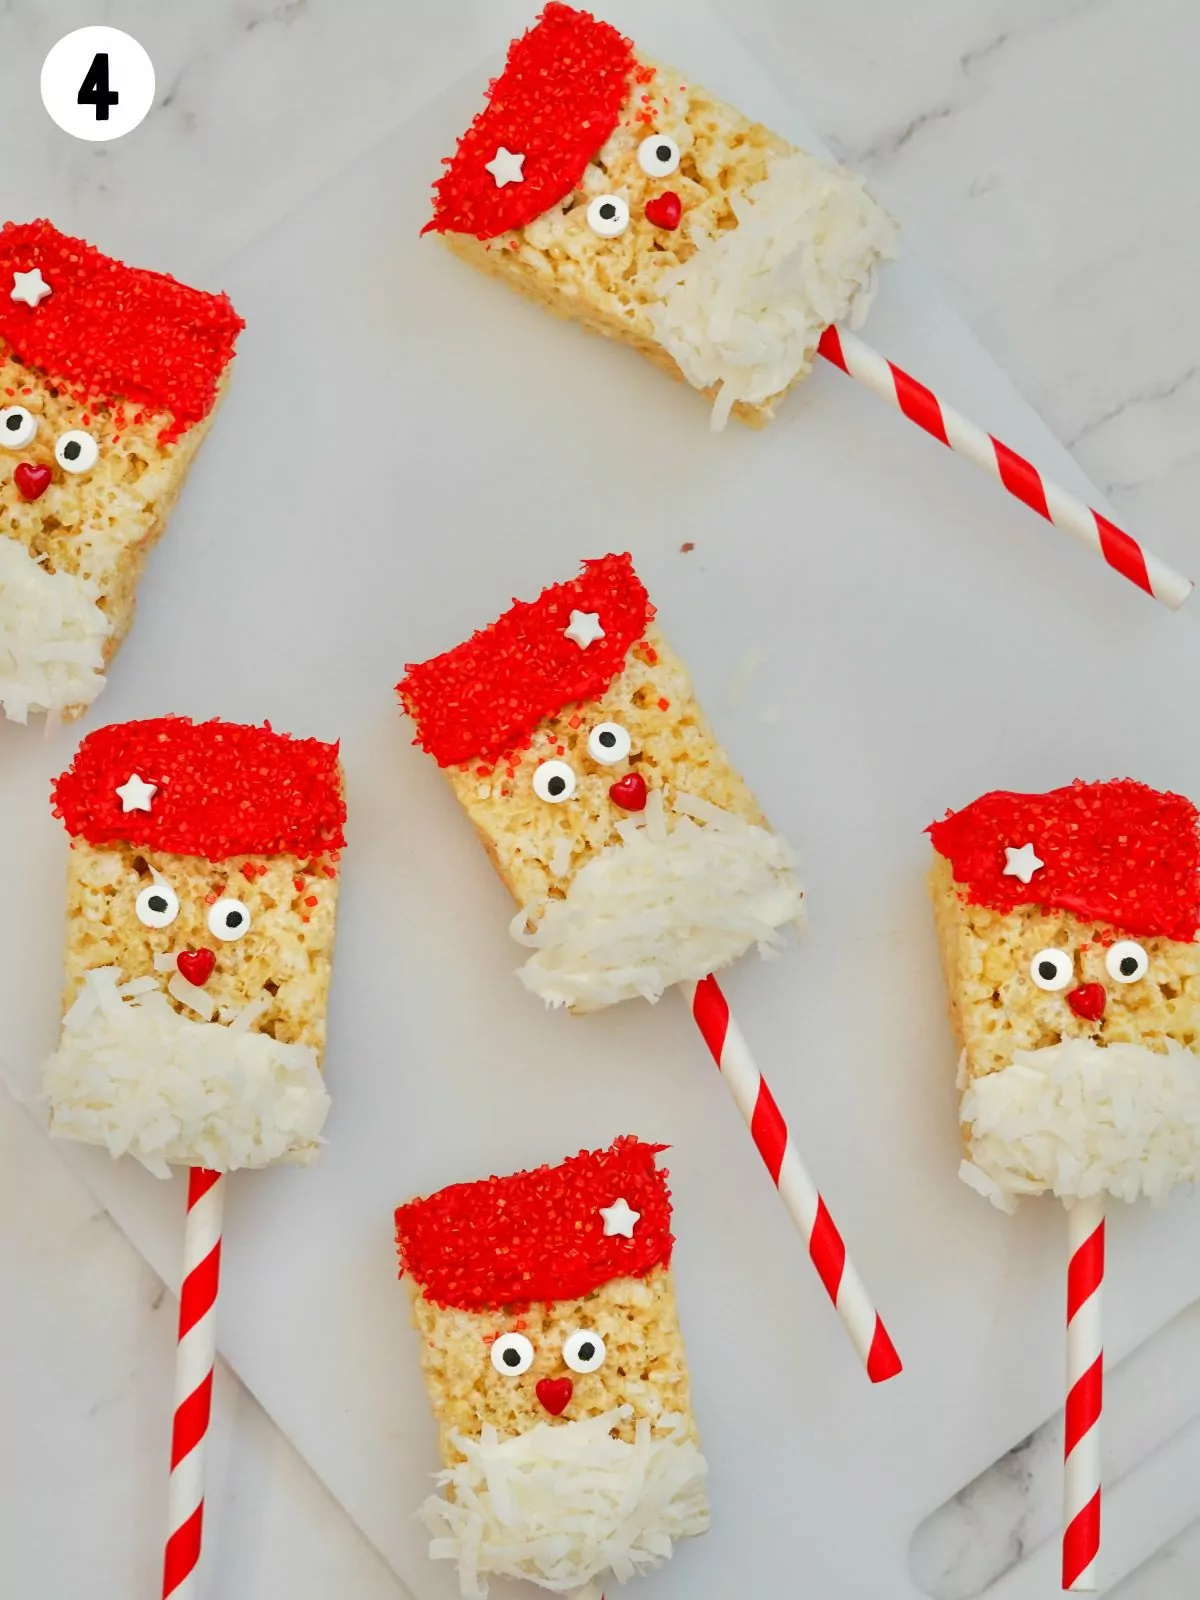 Rice krispie treats decorated to look like Santa.